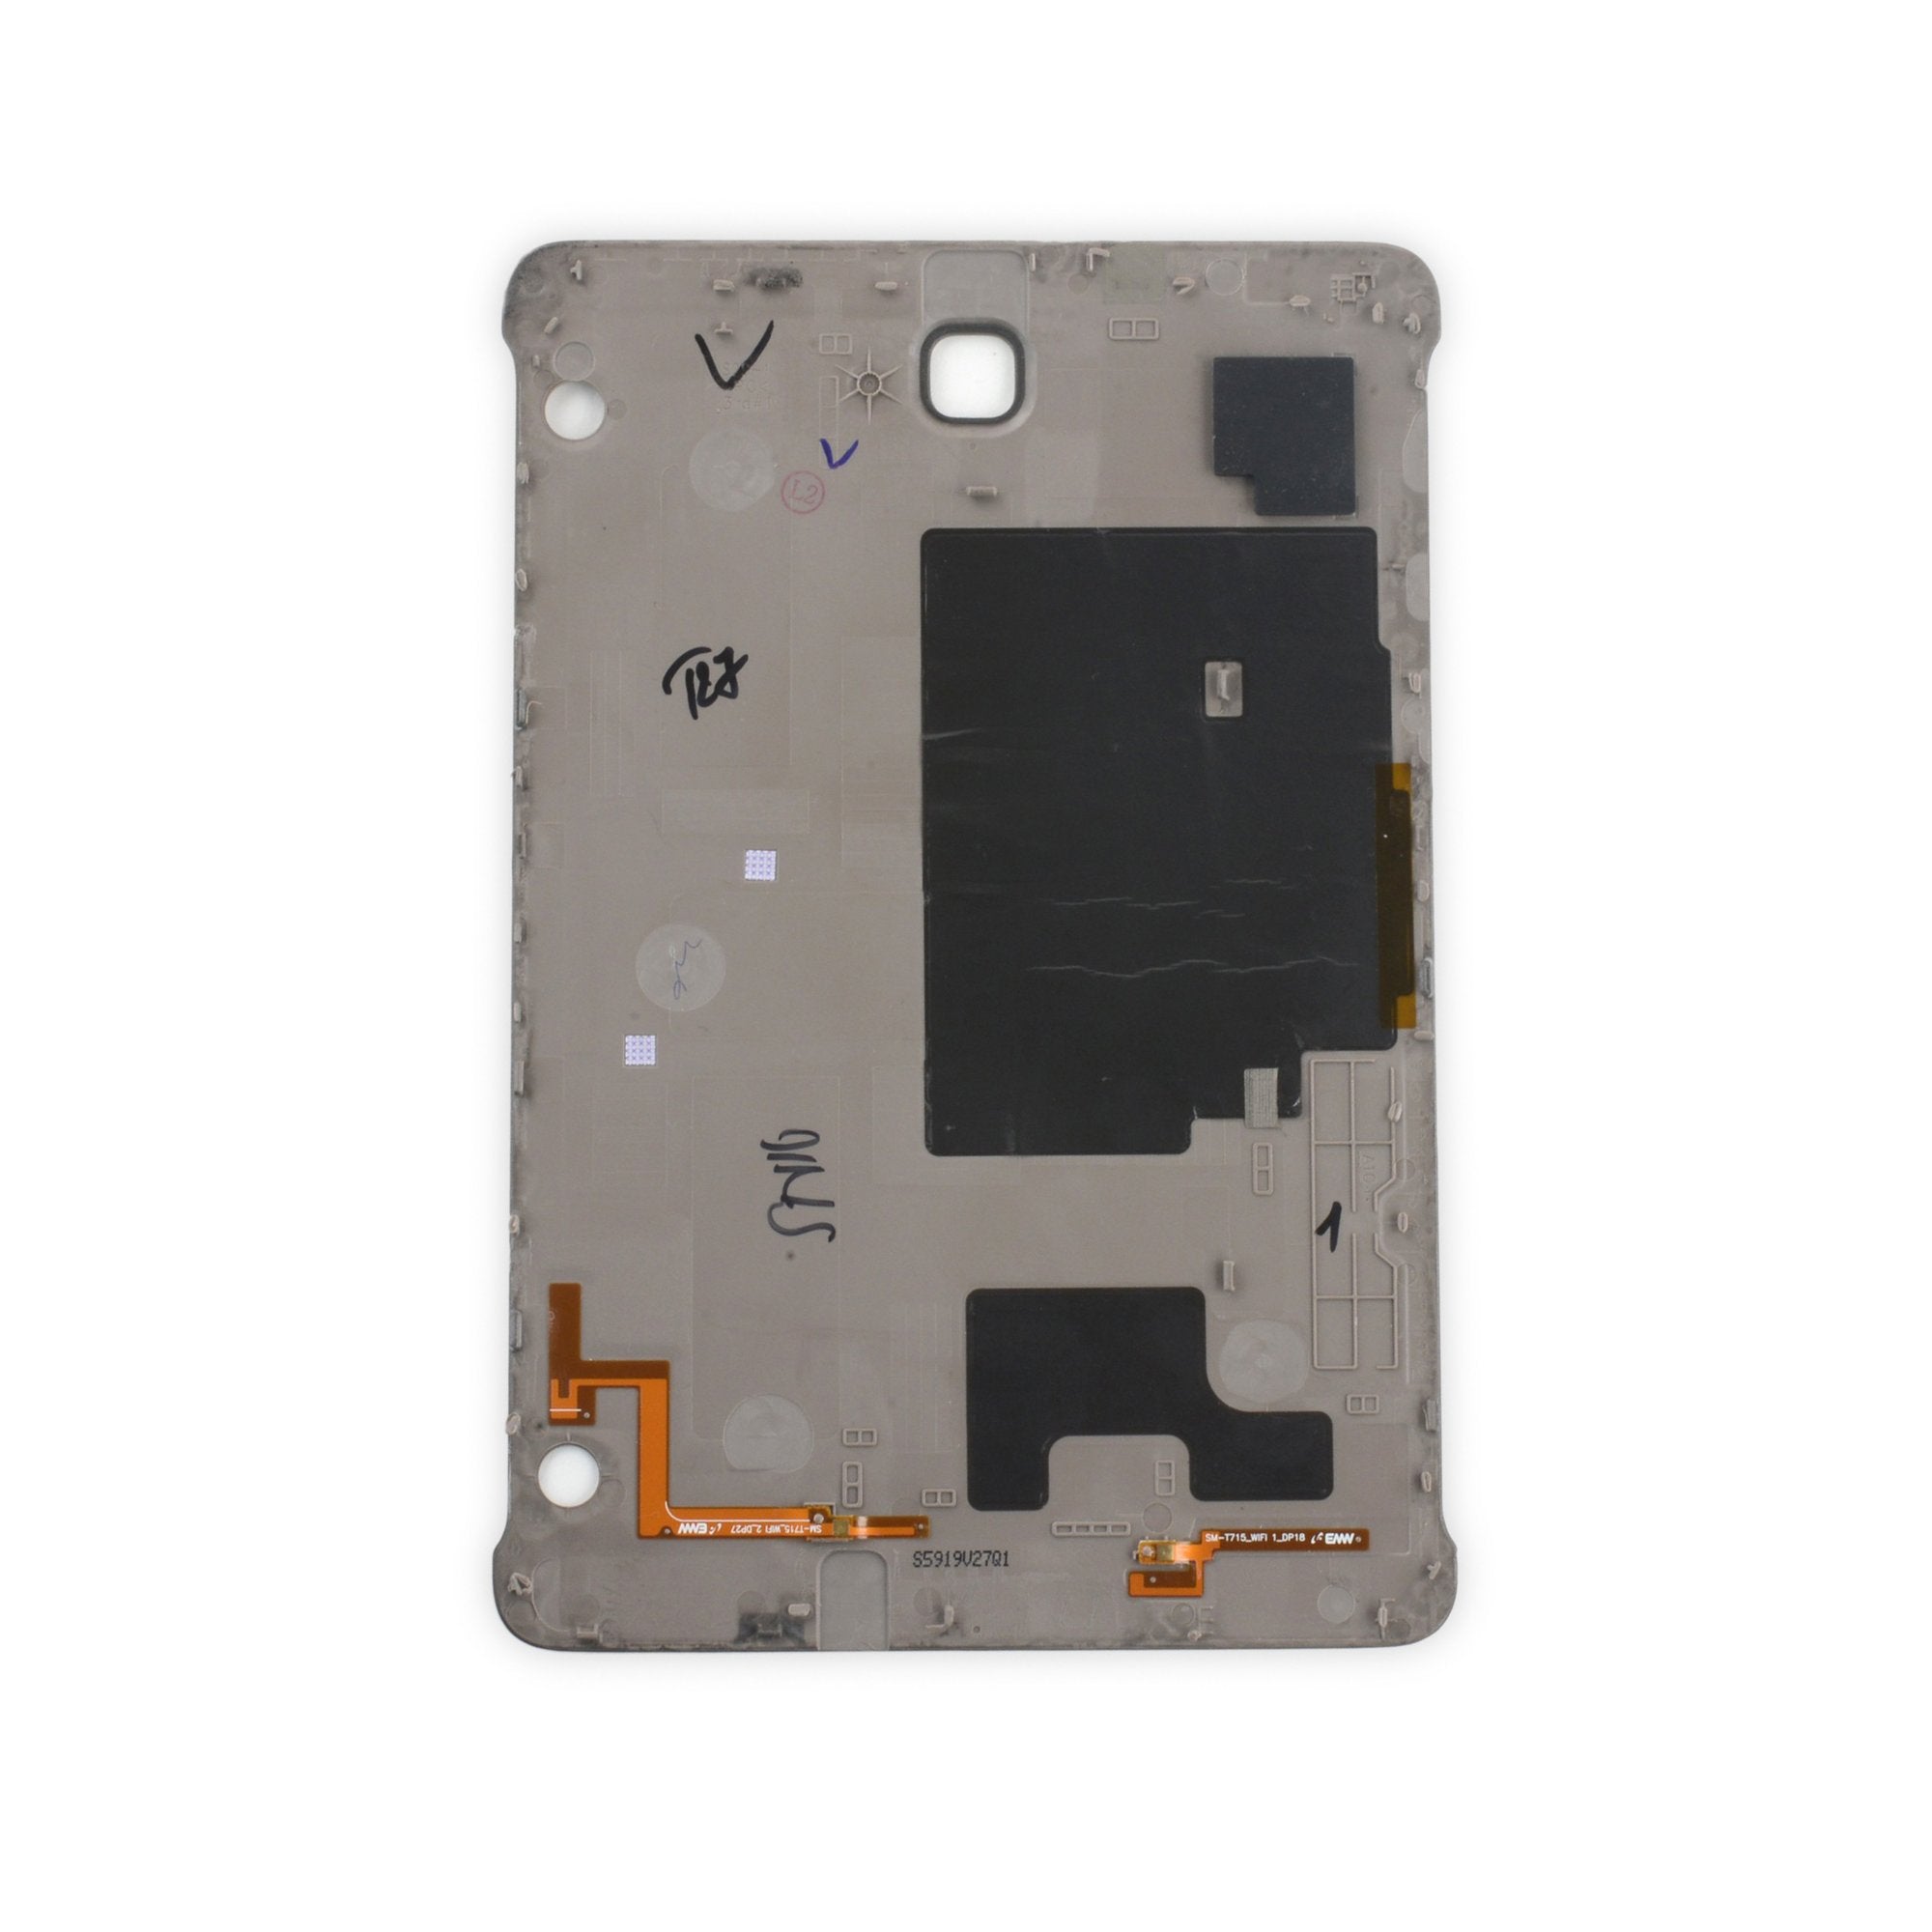 Galaxy Tab S2 8.0 (Wi-Fi) Rear Panel Gold Used, A-Stock